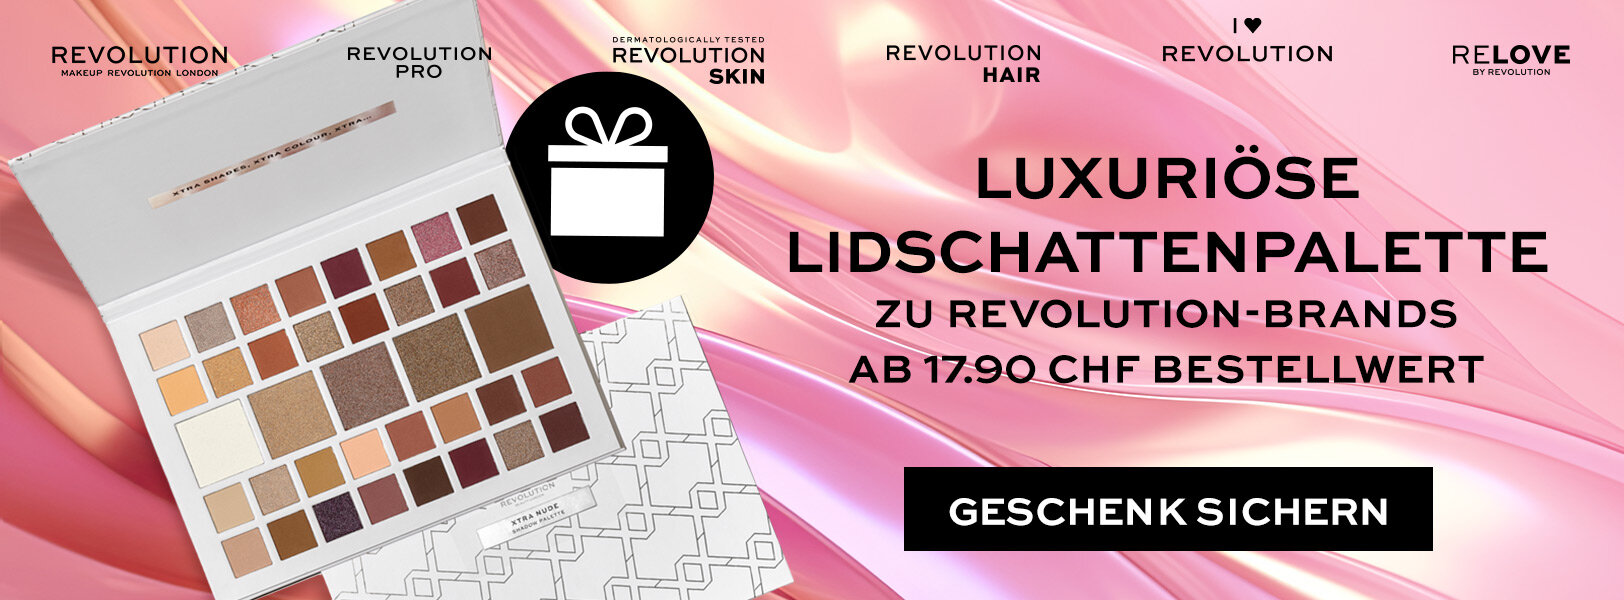 RVLT_MIX-brands_gift_revolution-beauty-mit-geschenk-ab-17.90-chf-(30-st)28.3.-10.4.